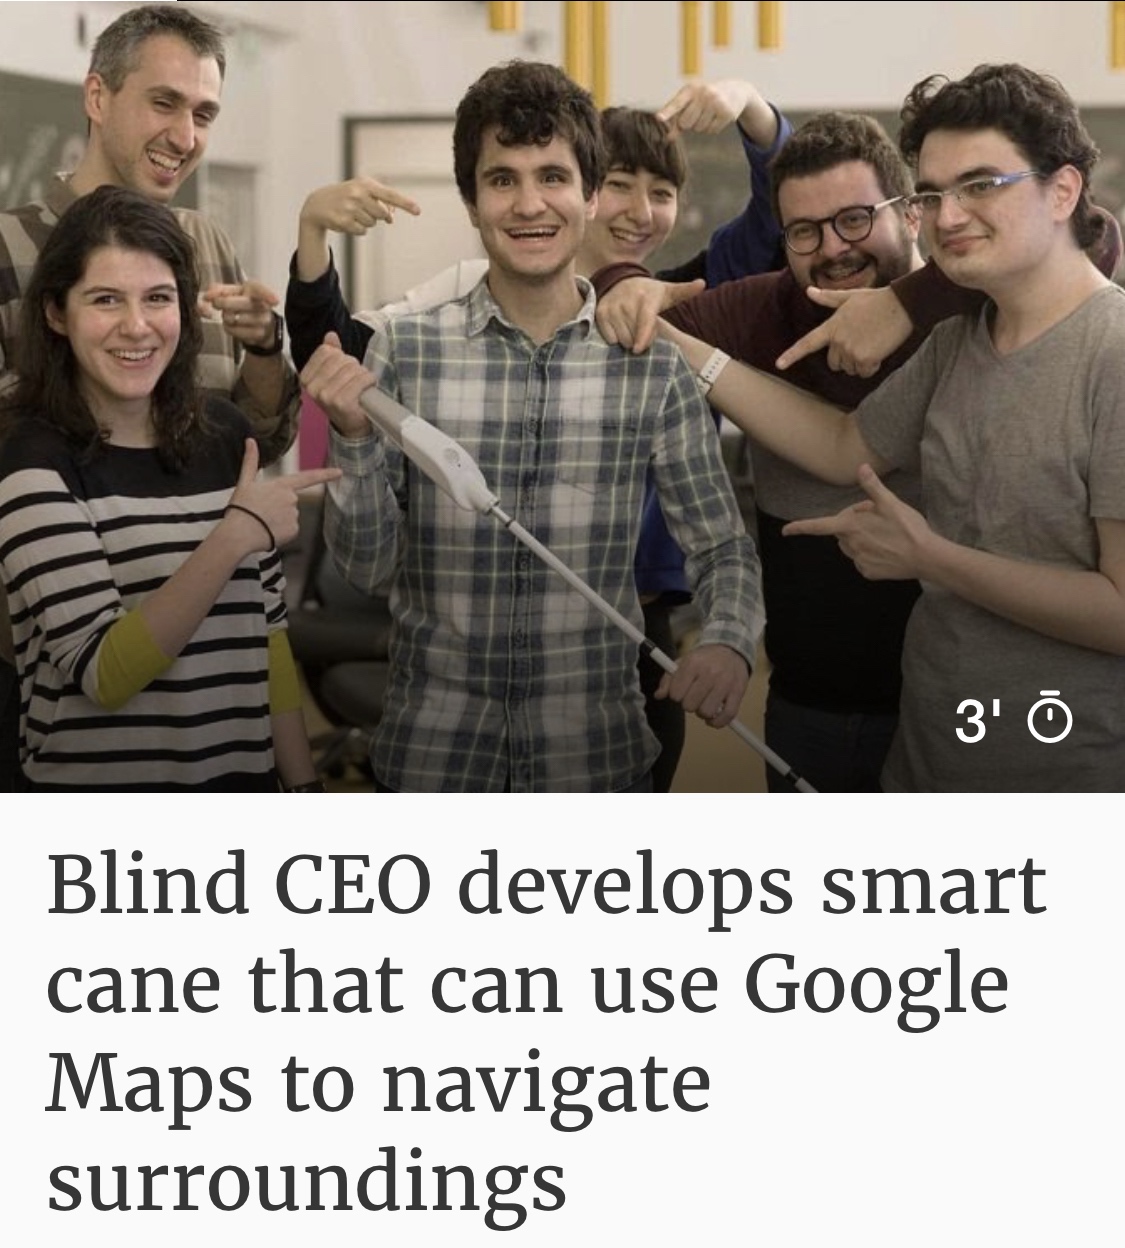 kursat ceylan - 3' Blind Ceo develops smart cane that can use Google Maps to navigate surroundings